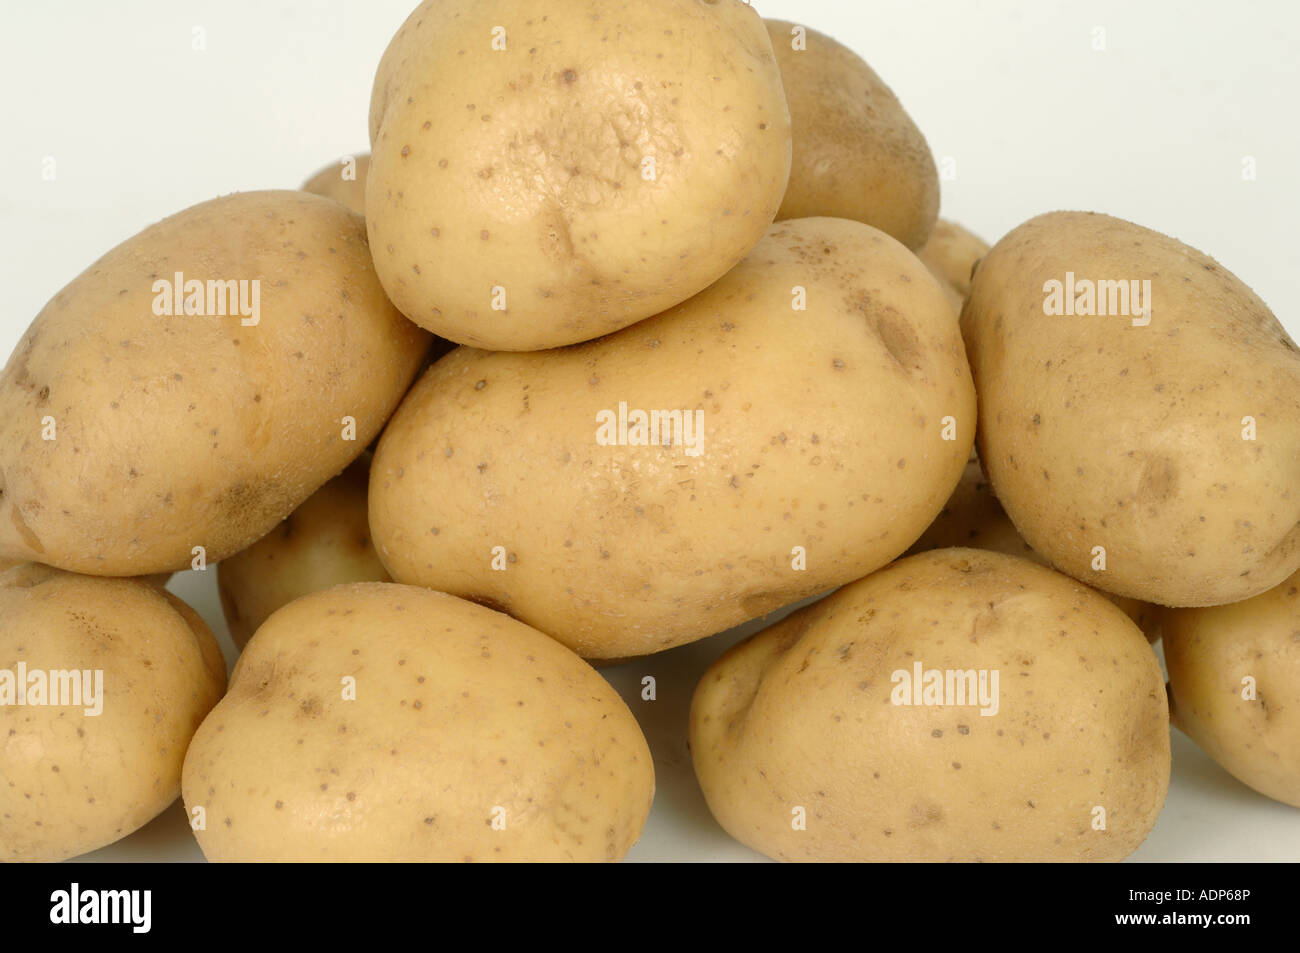 Tubers of Maris Piper potatoes ex shop or supermarket Stock Photo